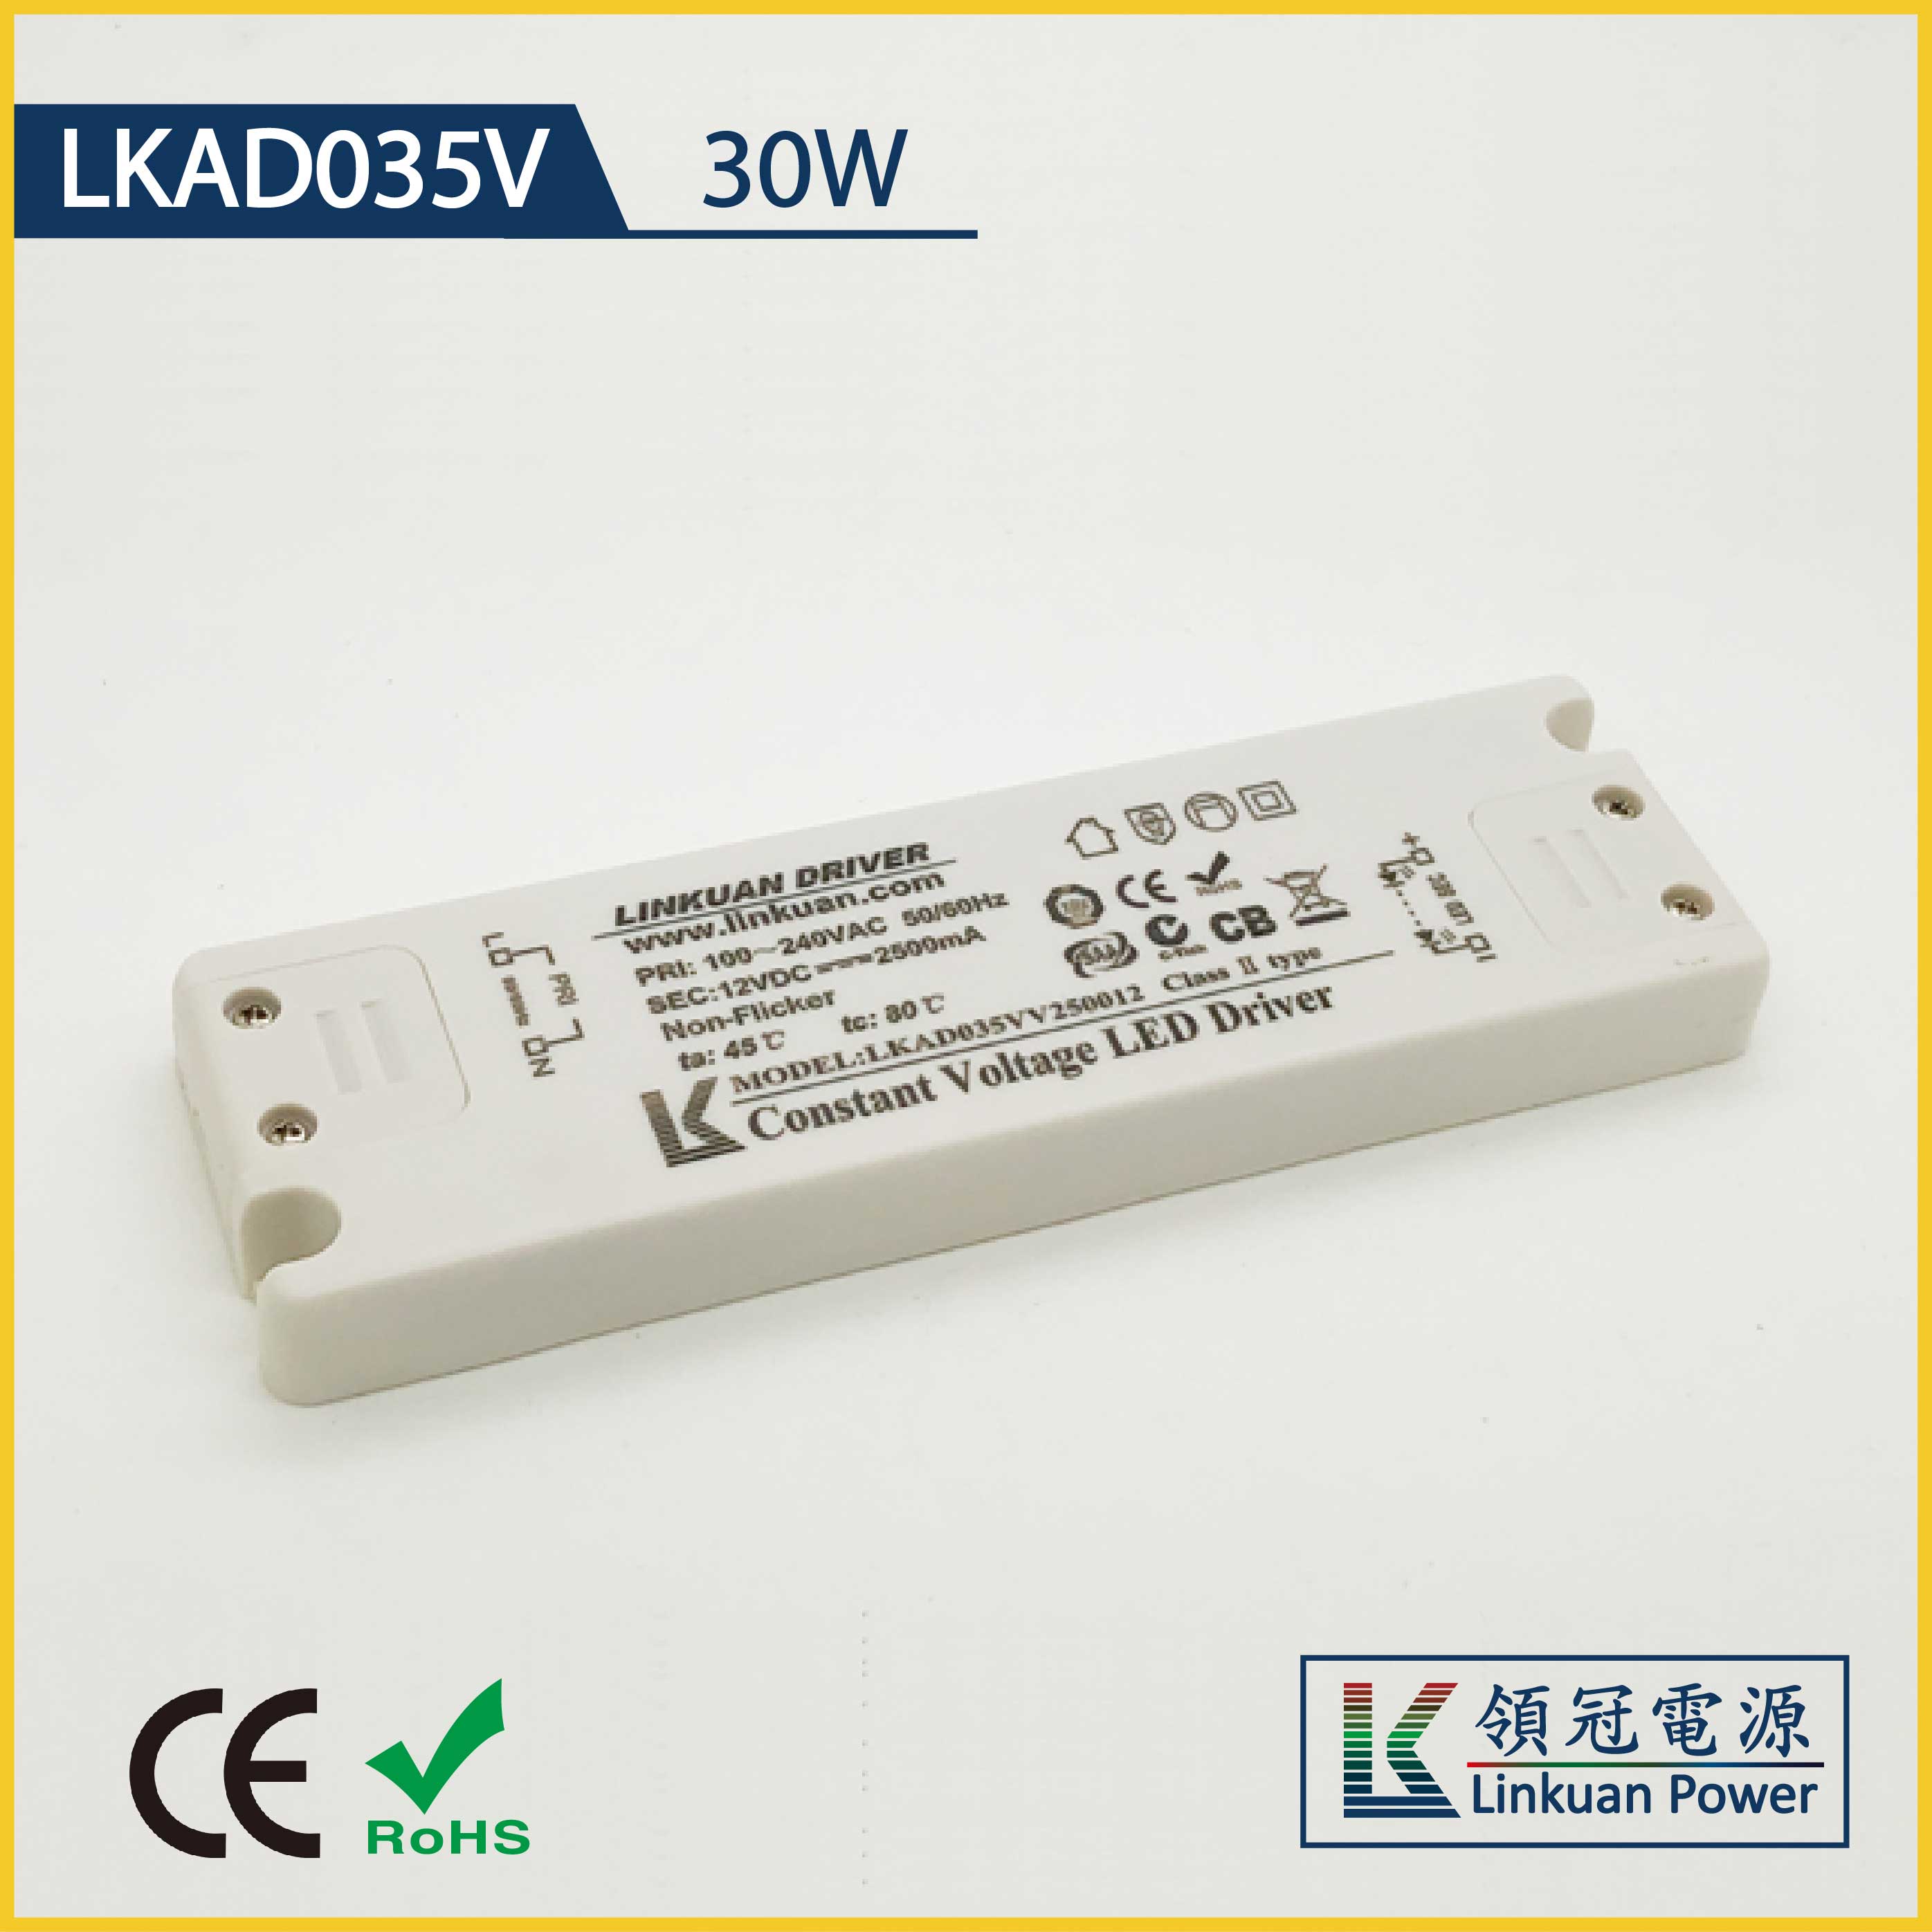 LKAD035V 30W constant voltage 12V/24V 2.5A/1.25A slim led driver